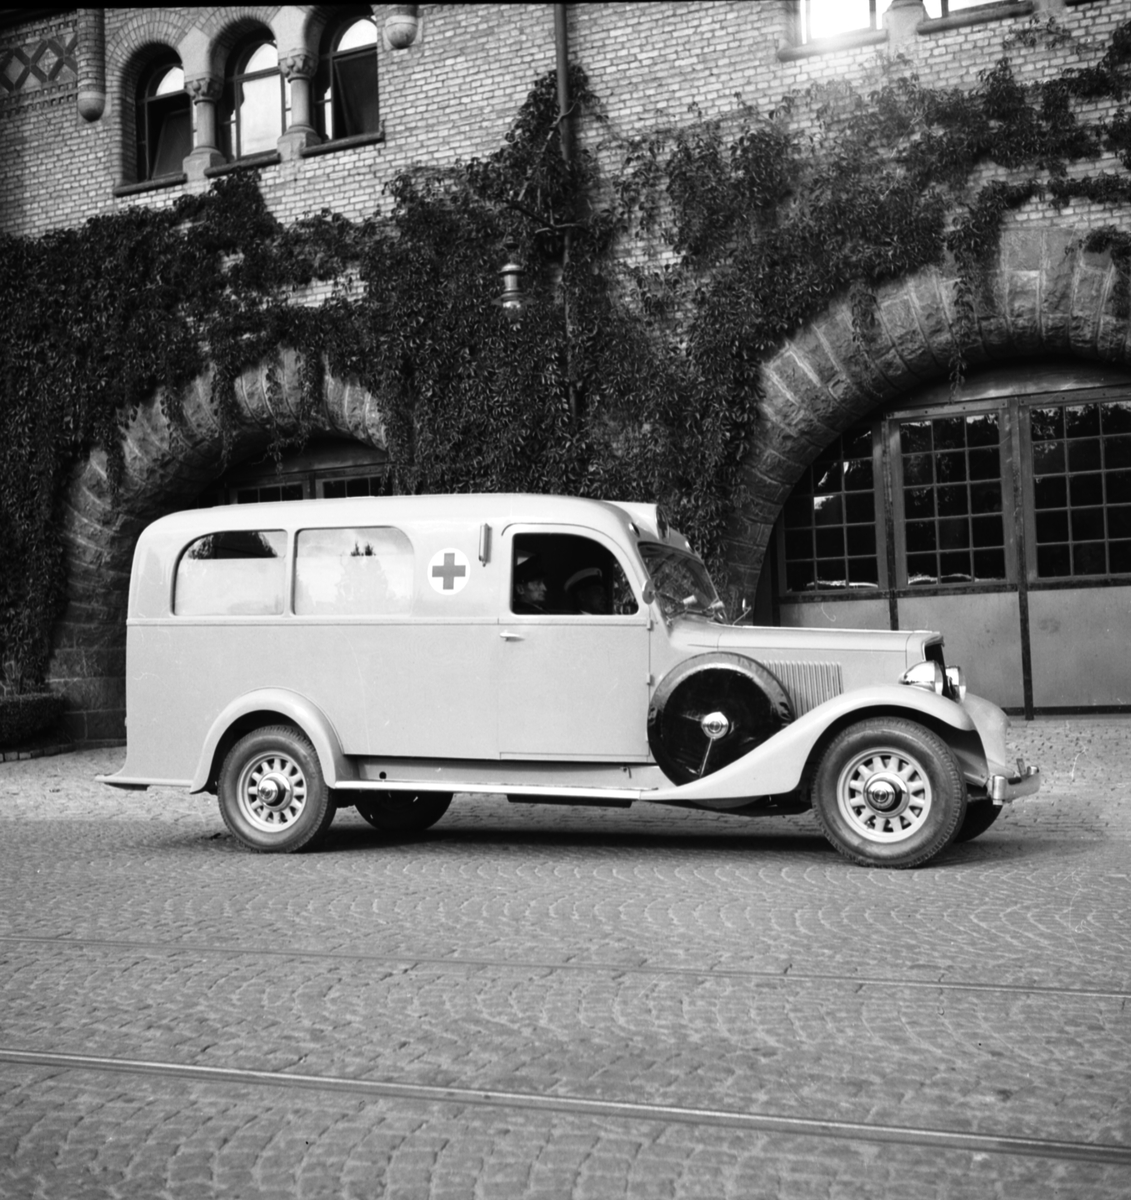 Reportage för Gefle Dagblad. Nya Ambulansvagnen. Augusti 1937

